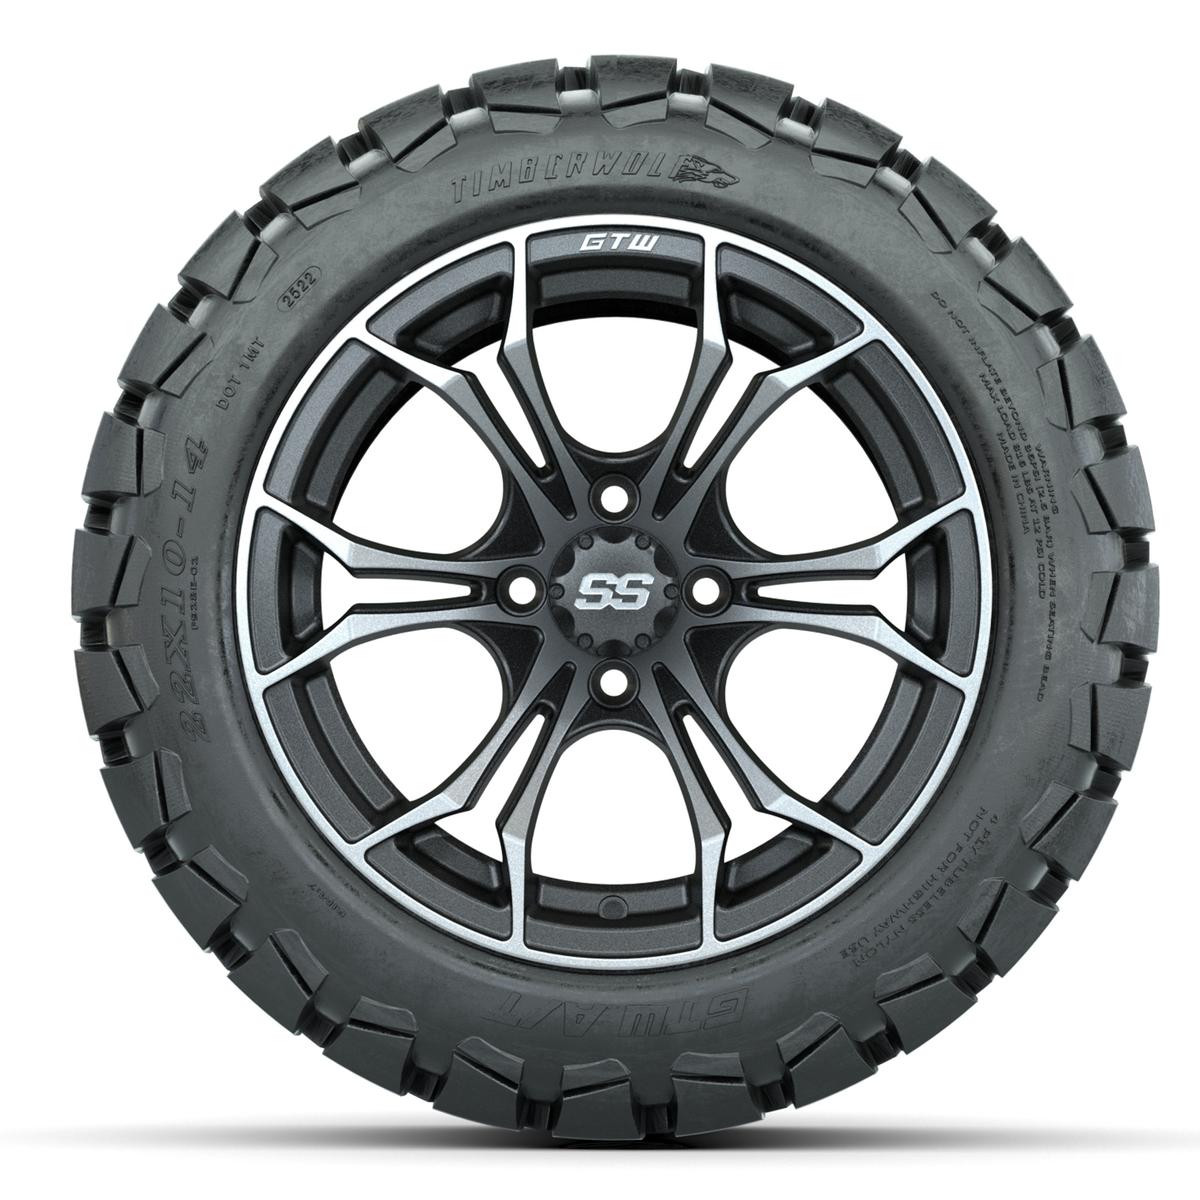 GTW Spyder Matte Grey 14 in Wheels with 22x10-14 GTW Timberwolf All-Terrain Tires – Full Set